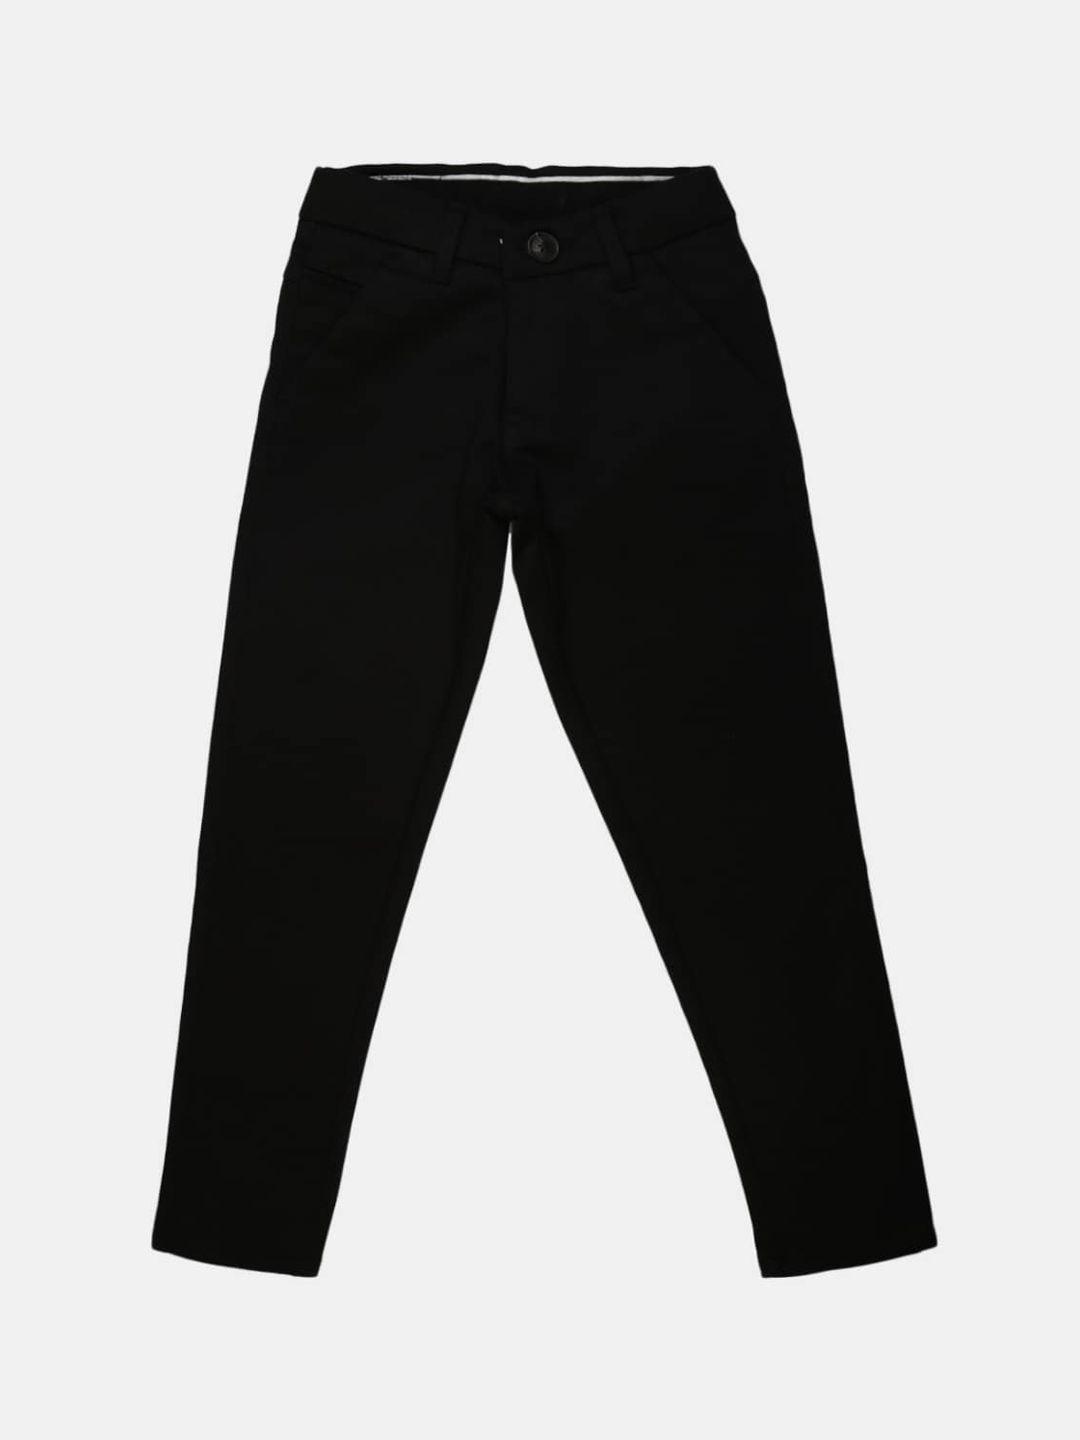 v-mart boys black classic trousers